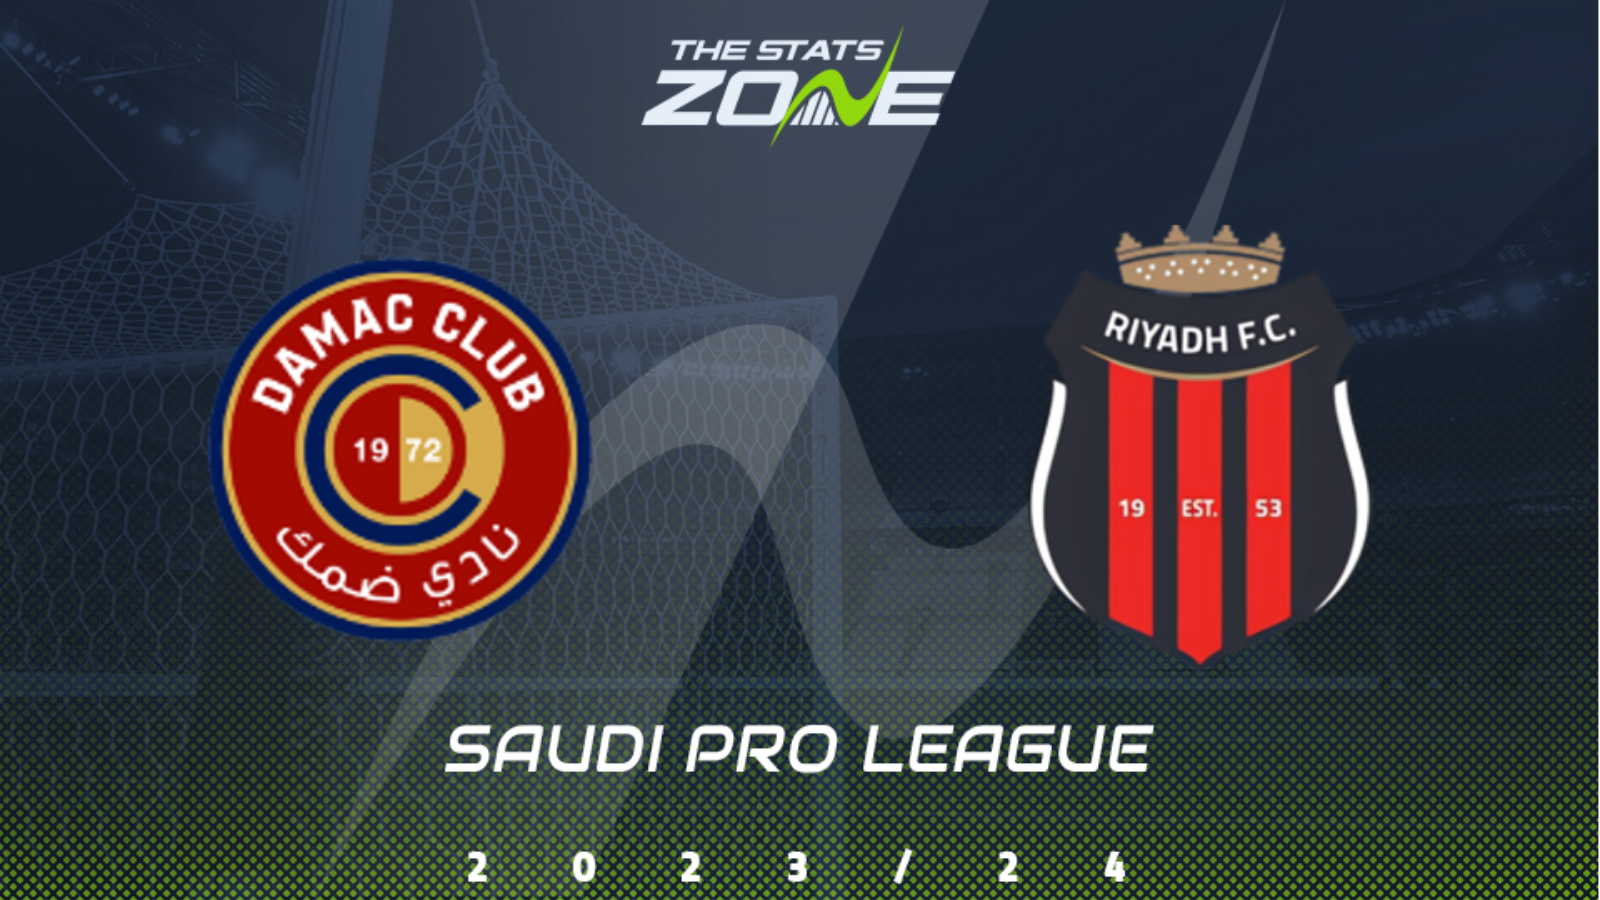 Saudi Pro League standings. Roshn Saudi Pro League background. Saudi Pro League logo без фона.